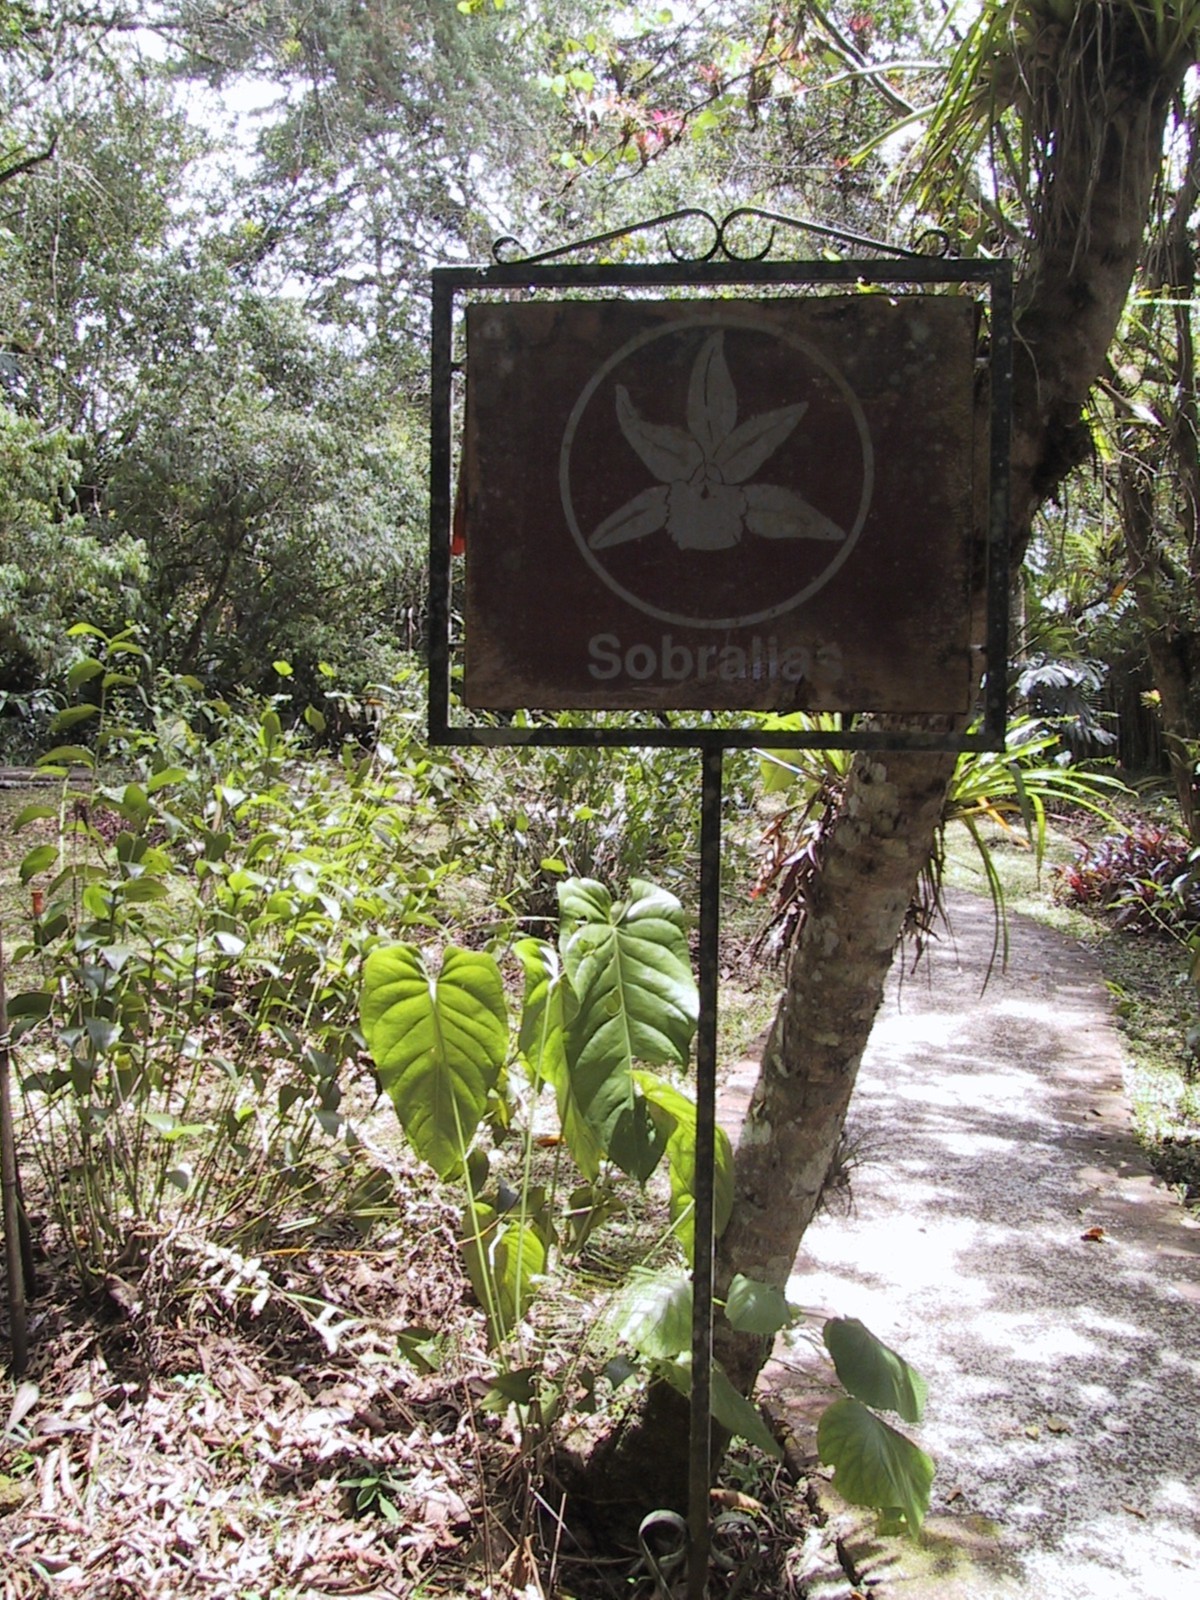 Sobralia sign at Lankester Gardens, CR